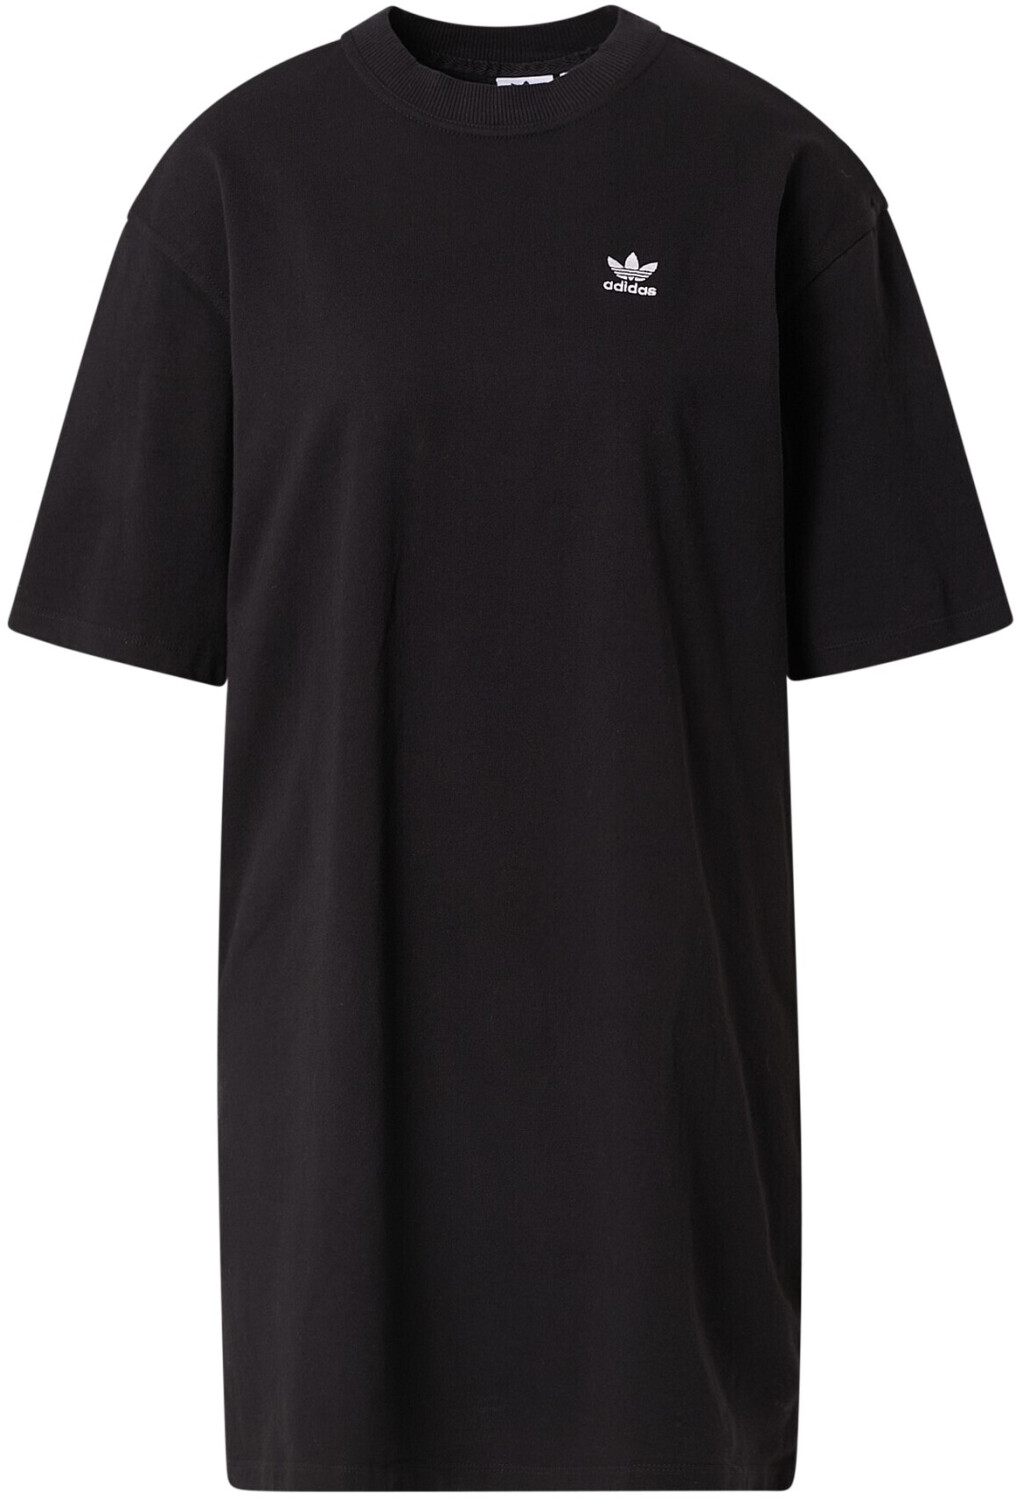 Image of Adidas Originals Adicolor Classics Big Trefoil T-Shirt Dress black